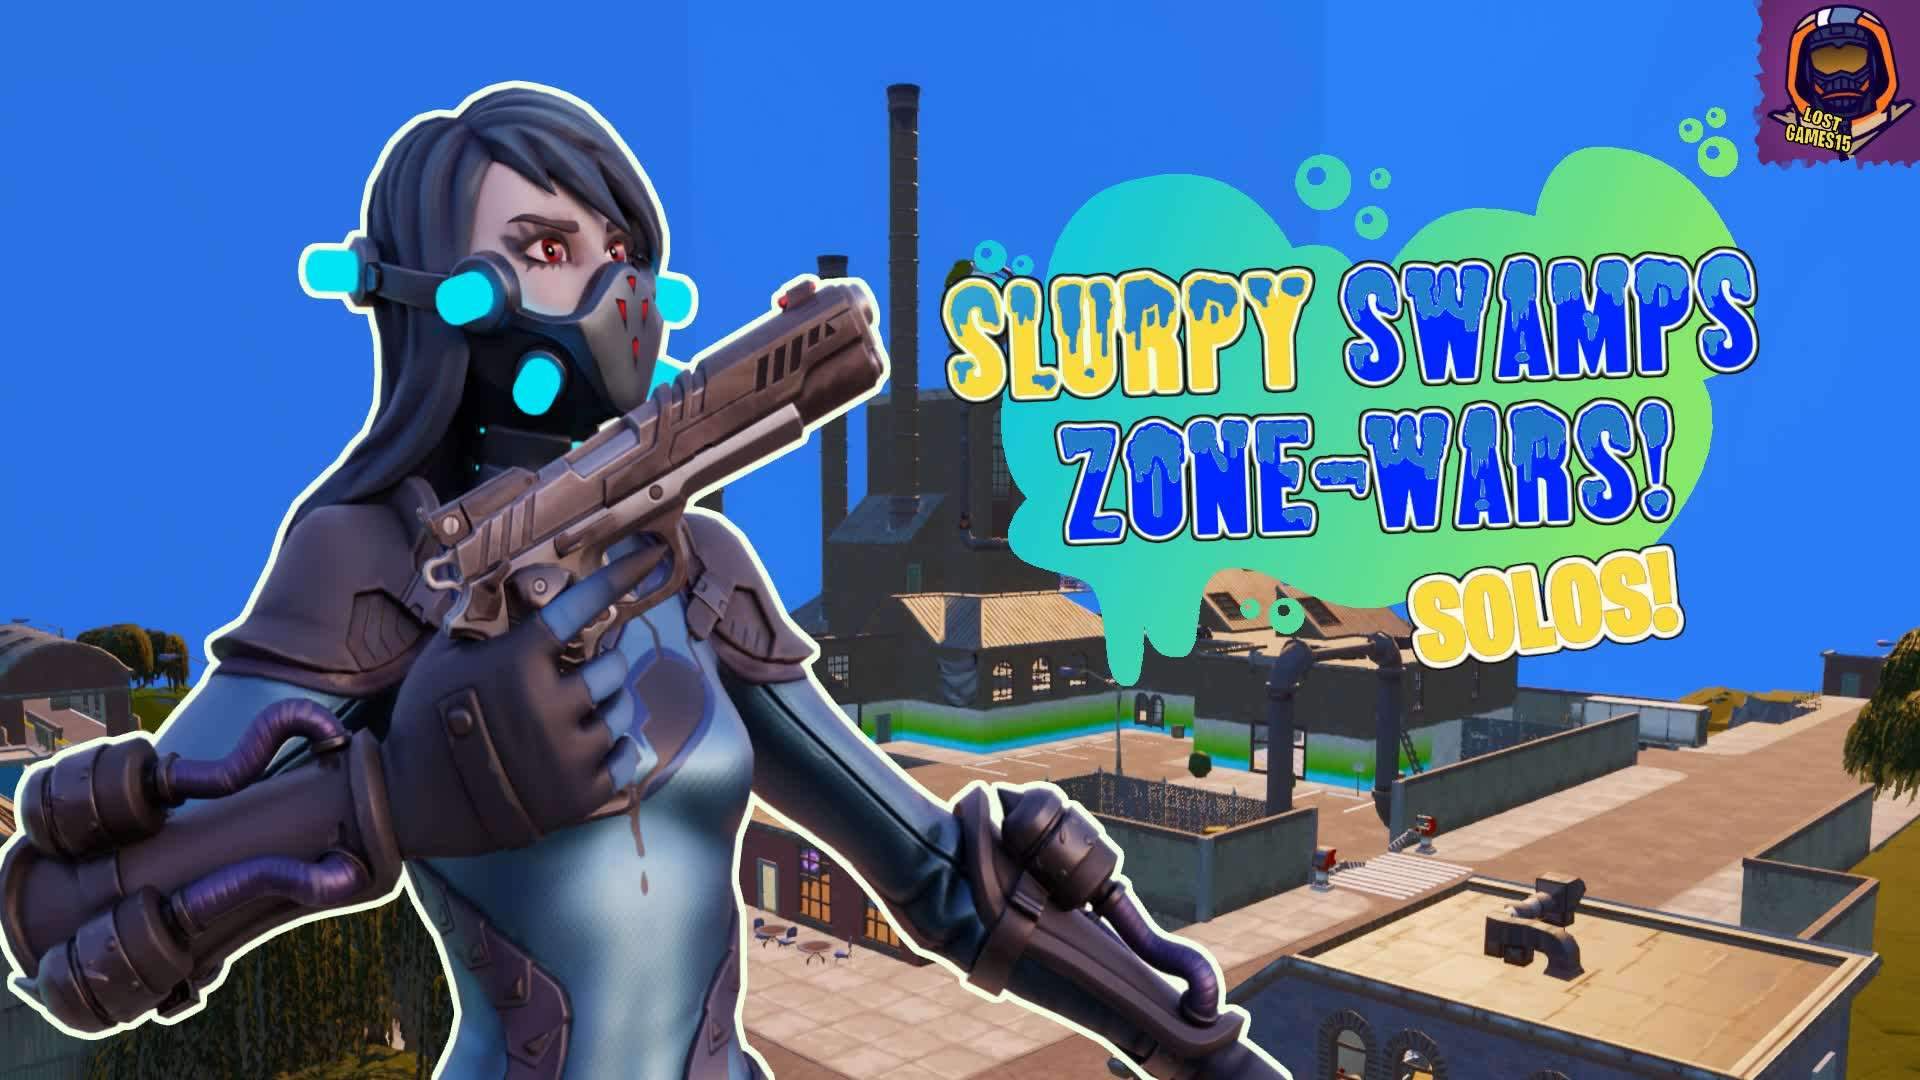 Slurpy Swamp Solo Zone Wars!